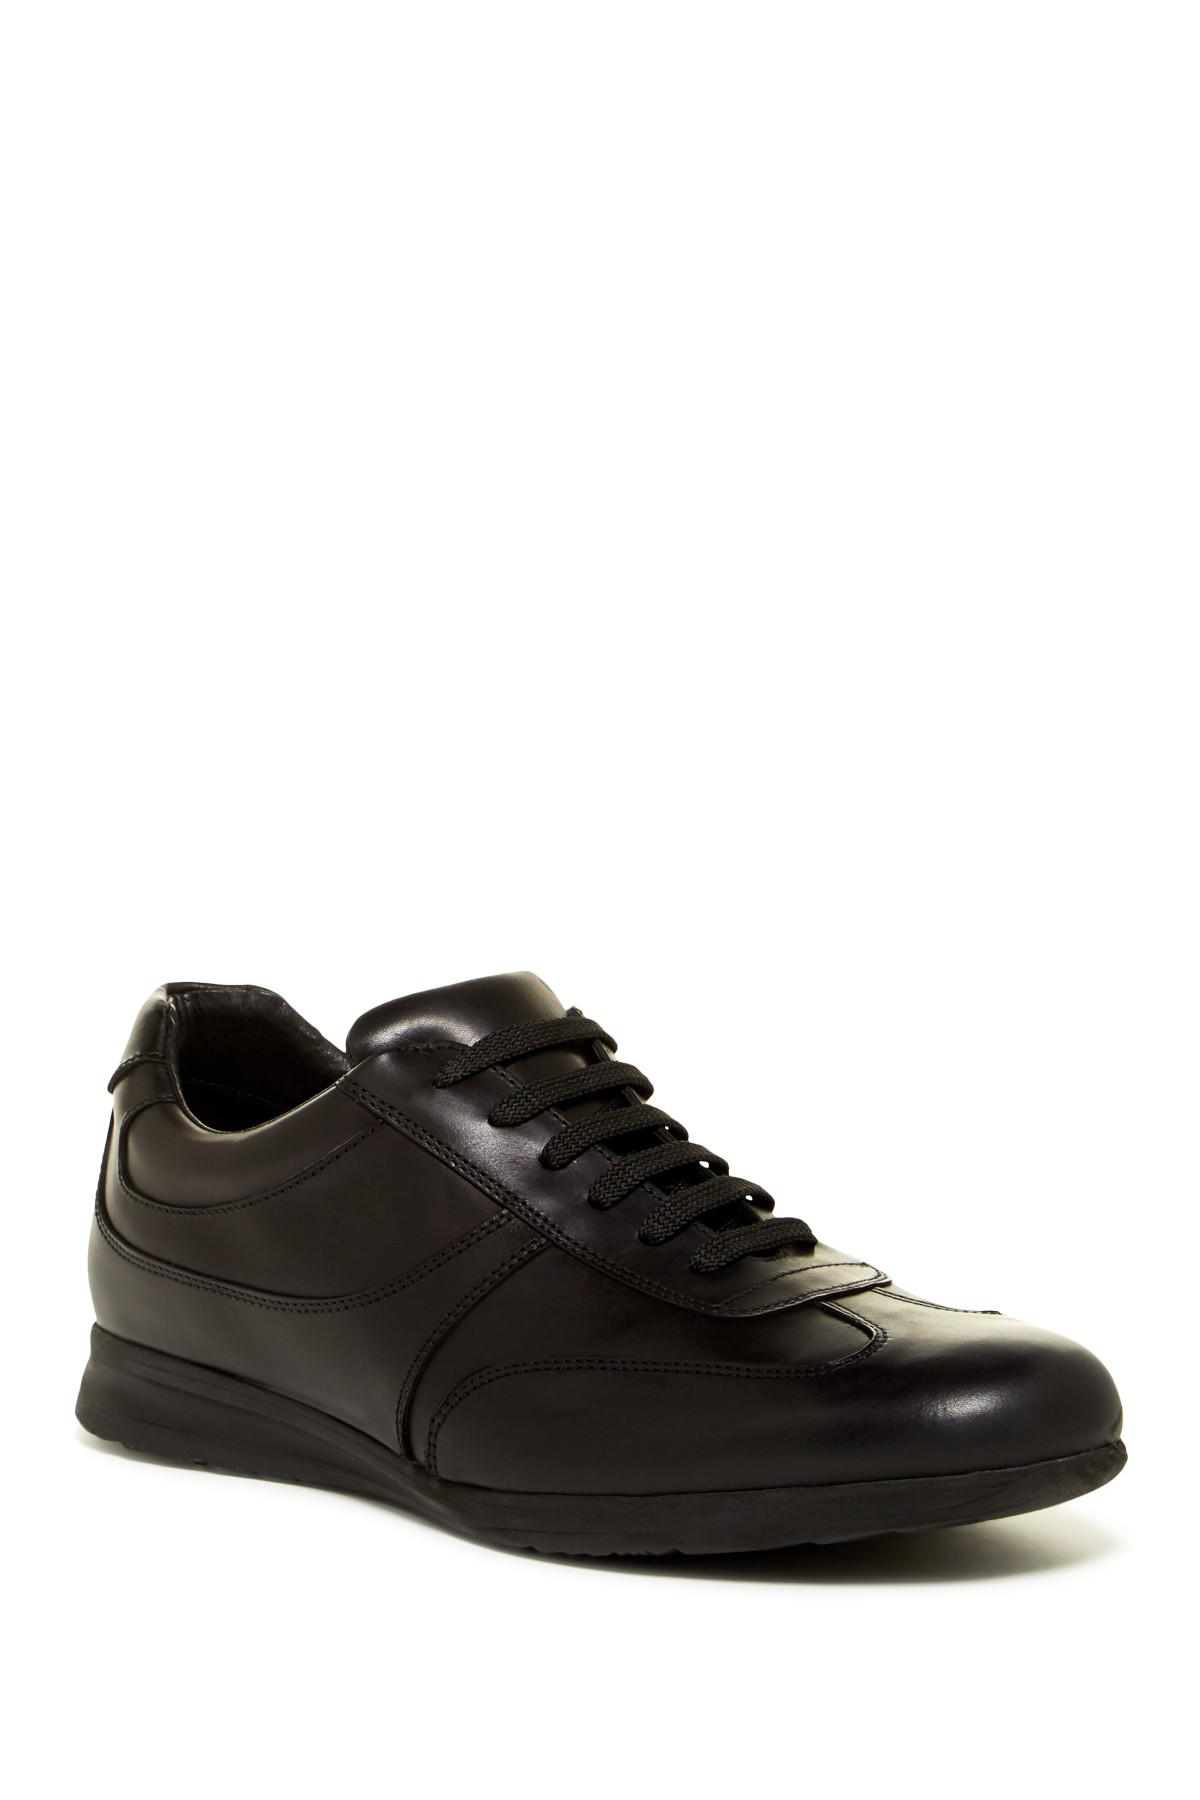 Bugatchi Leather Cinque Terre Sneaker in Nero (Black) for Men - Lyst